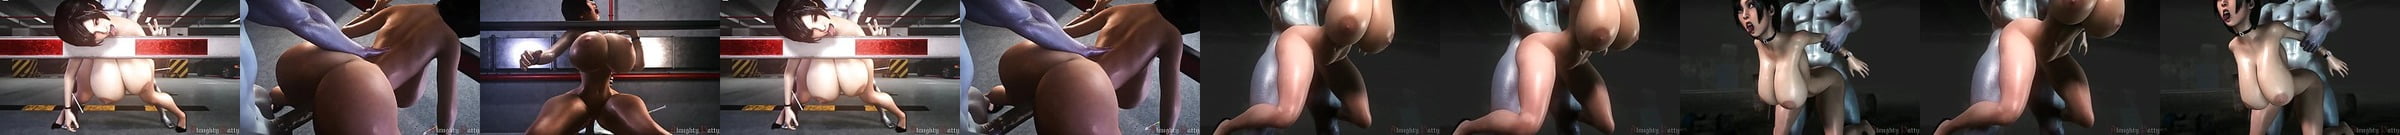 Featured Resident Evil 6 Ada Wong Nude Mod Porn Videos